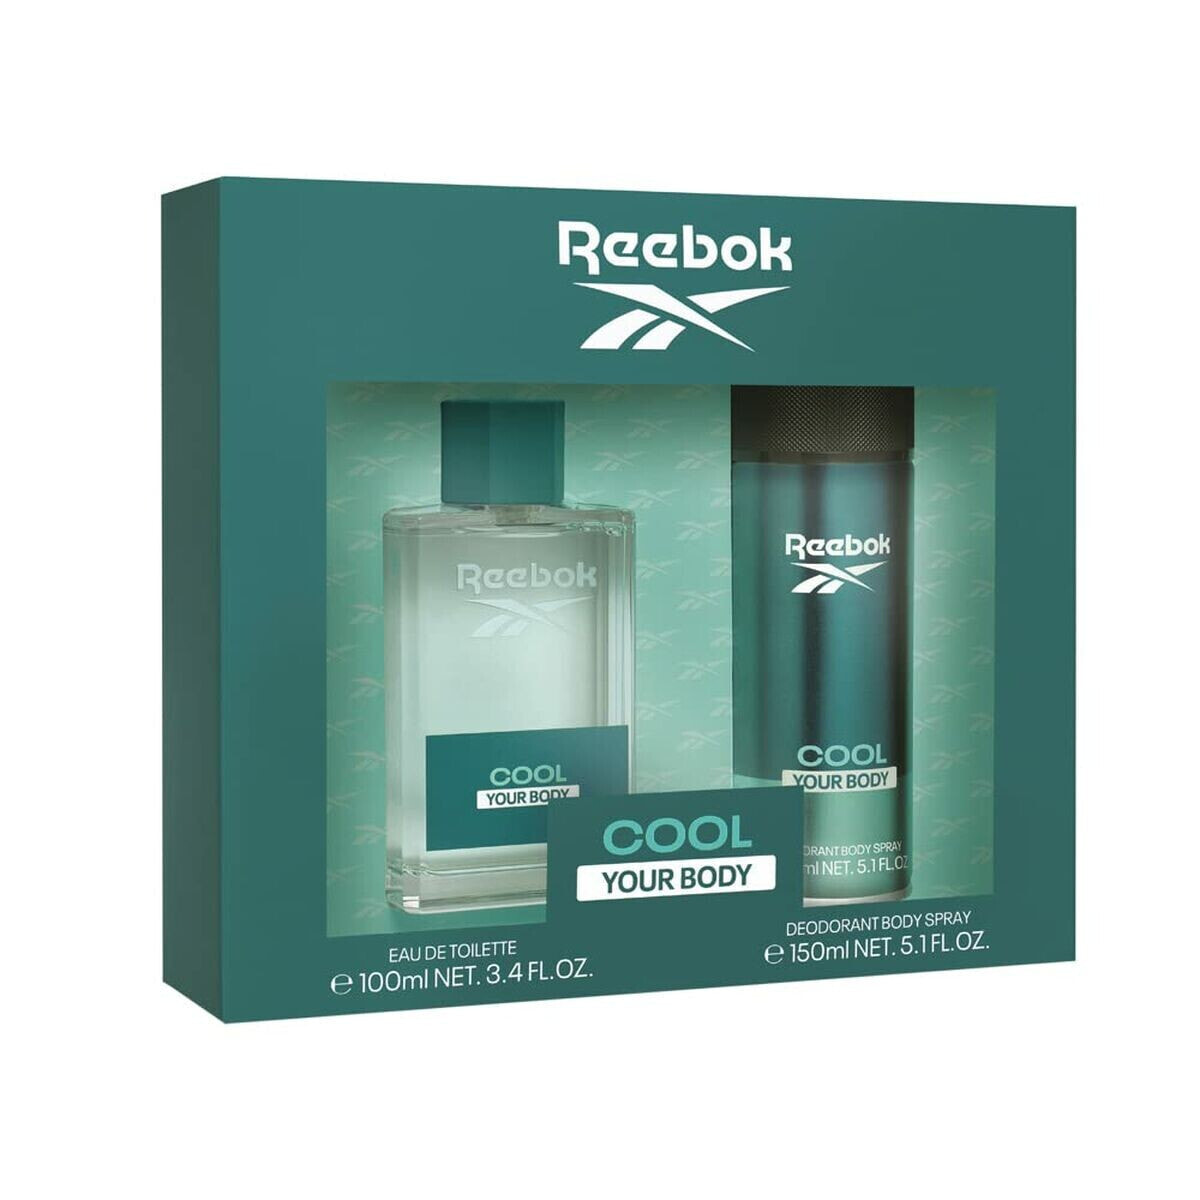 Мужской парфюмерный набор Reebok EDT Cool Your Body 2 Предметы